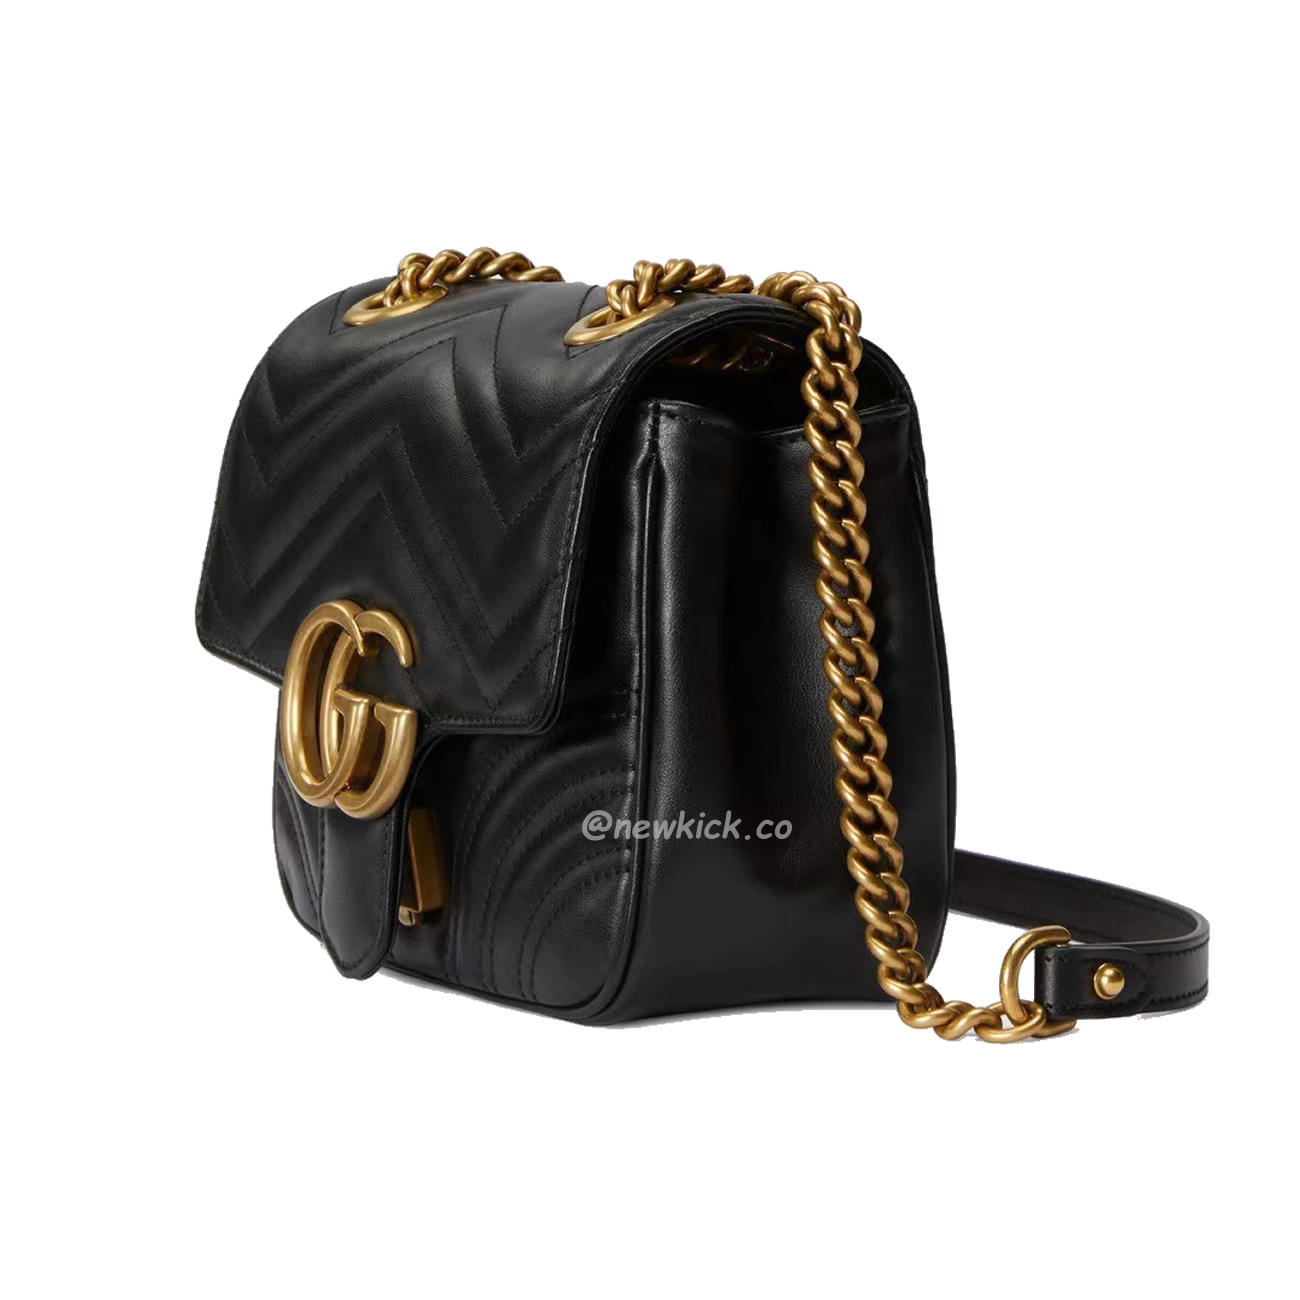 Gucci GG Marmont Mini Shoulder Bag Matelasse Chevron Black